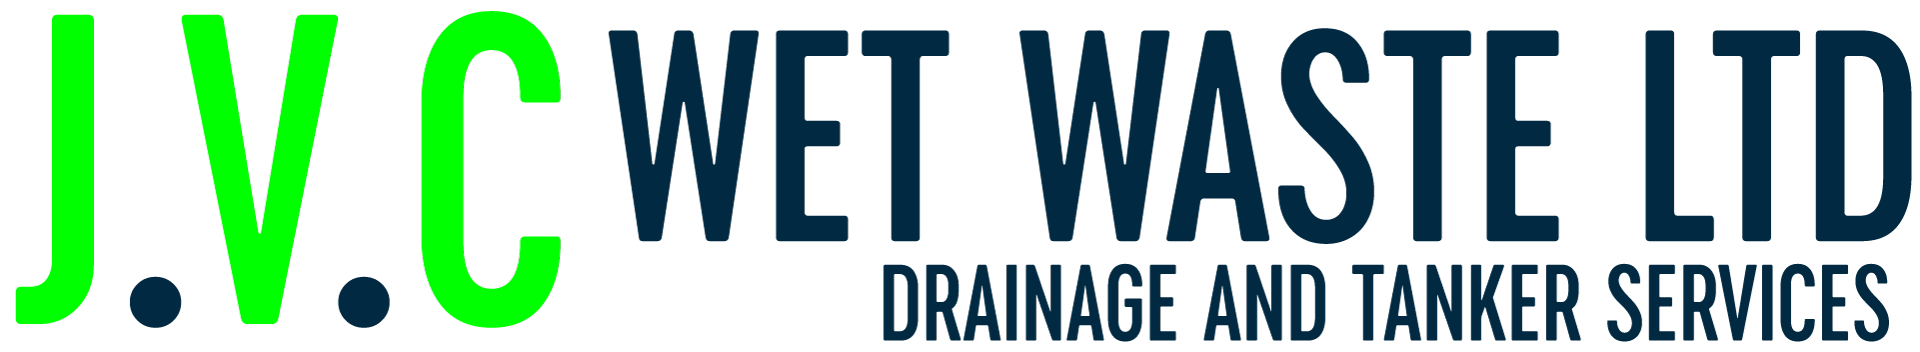 JVC Wet Waste | Drainage Specialists